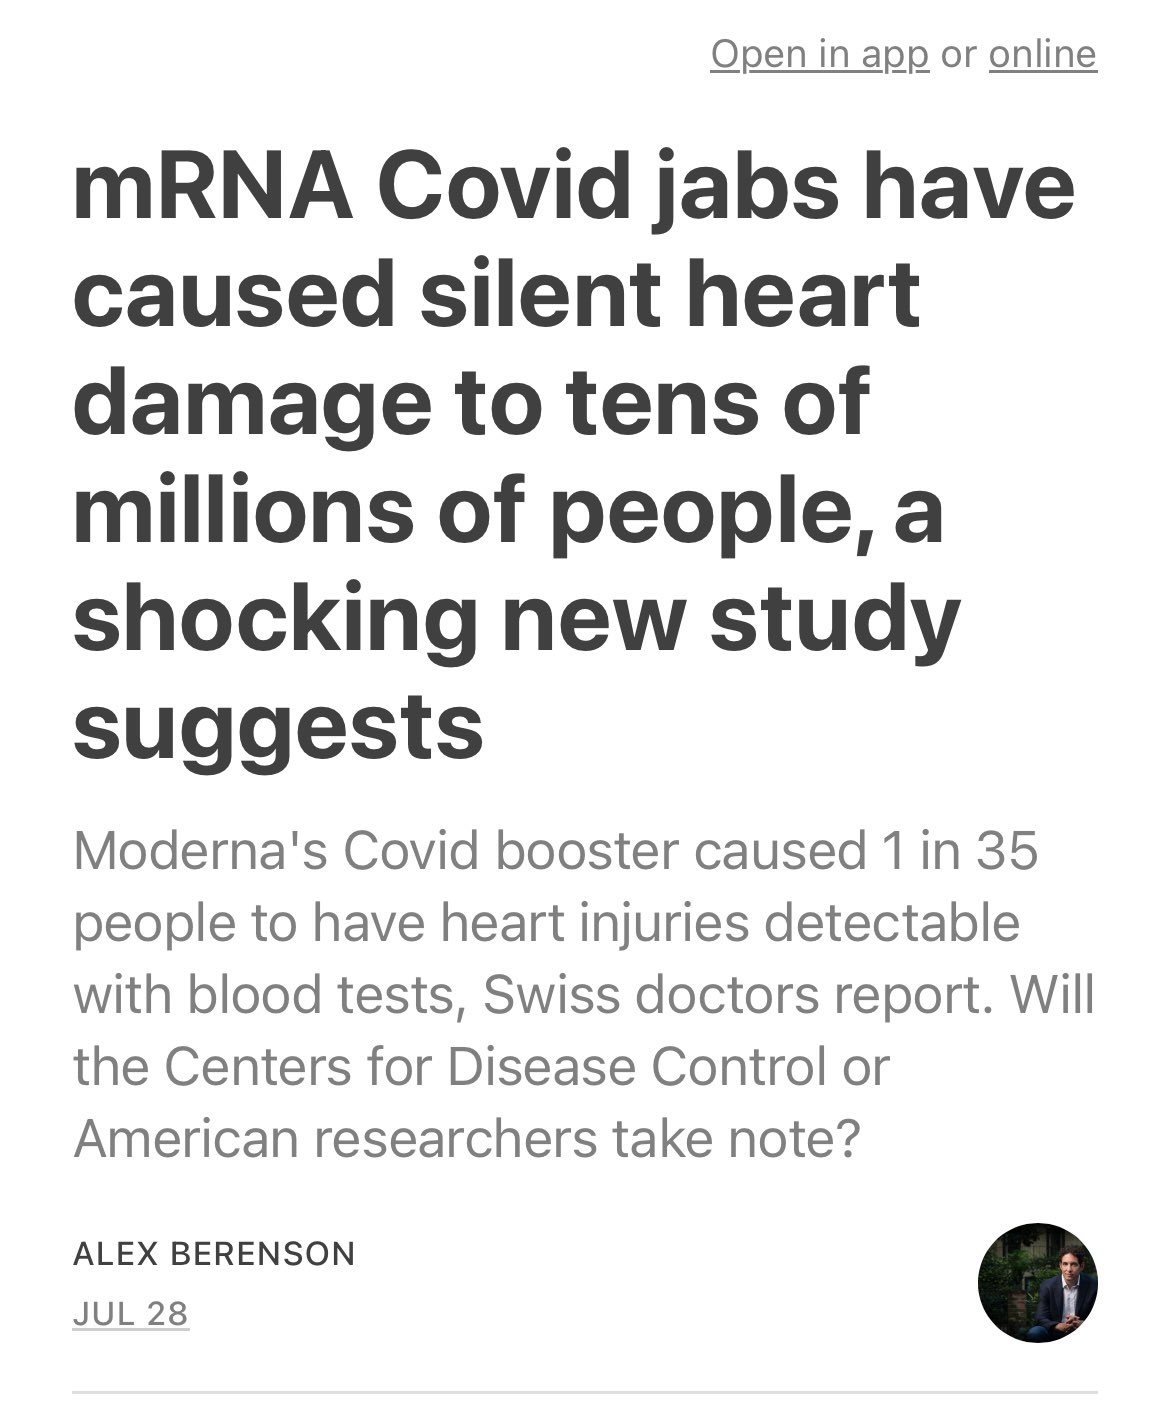 mRNA Covid Jabs